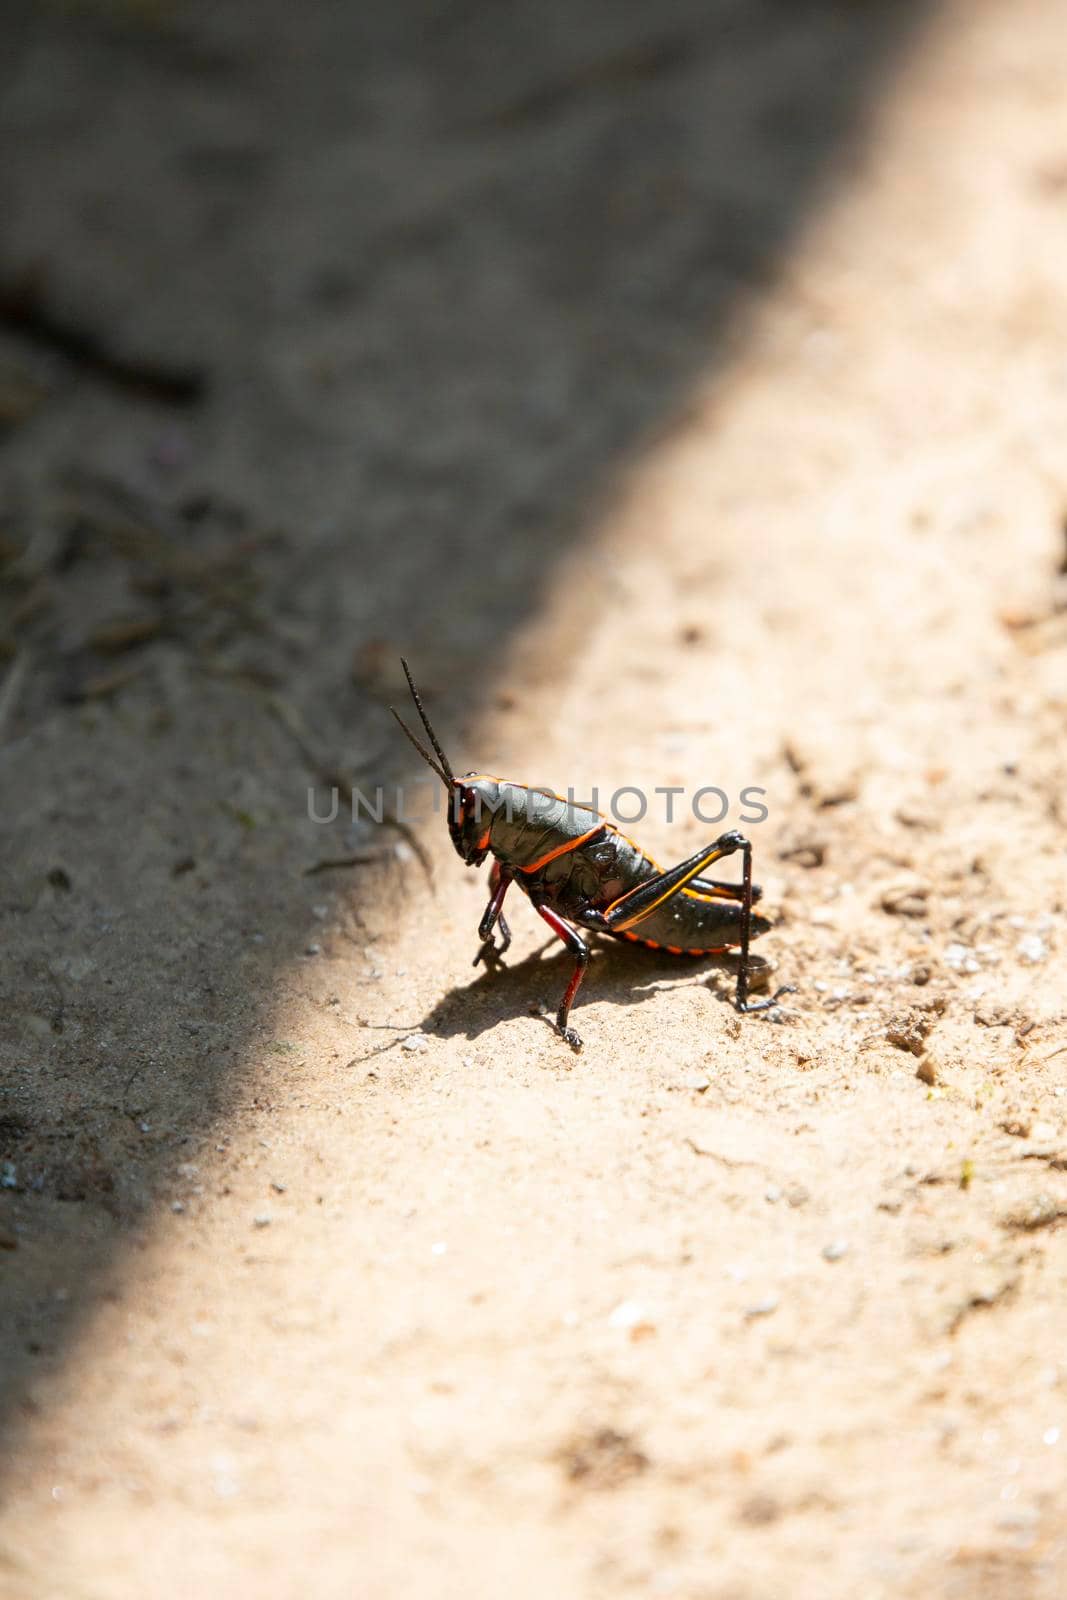 Southeastern Lubber Grasshopper by tornado98